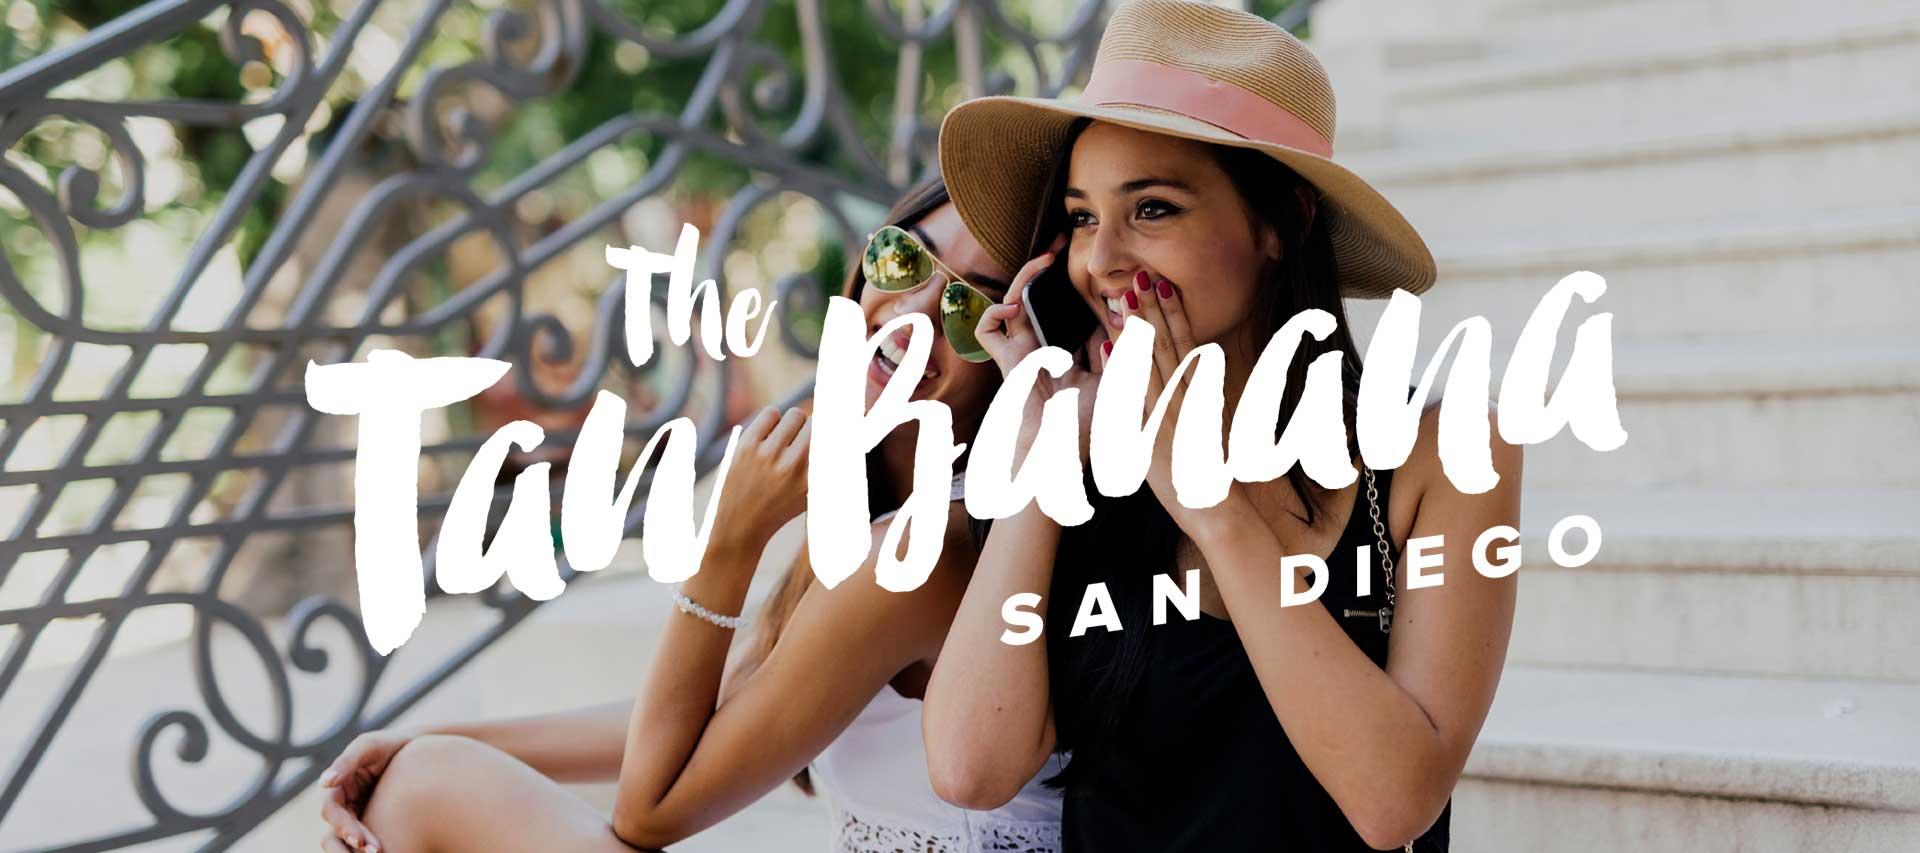 The Tan Banana - San Diego